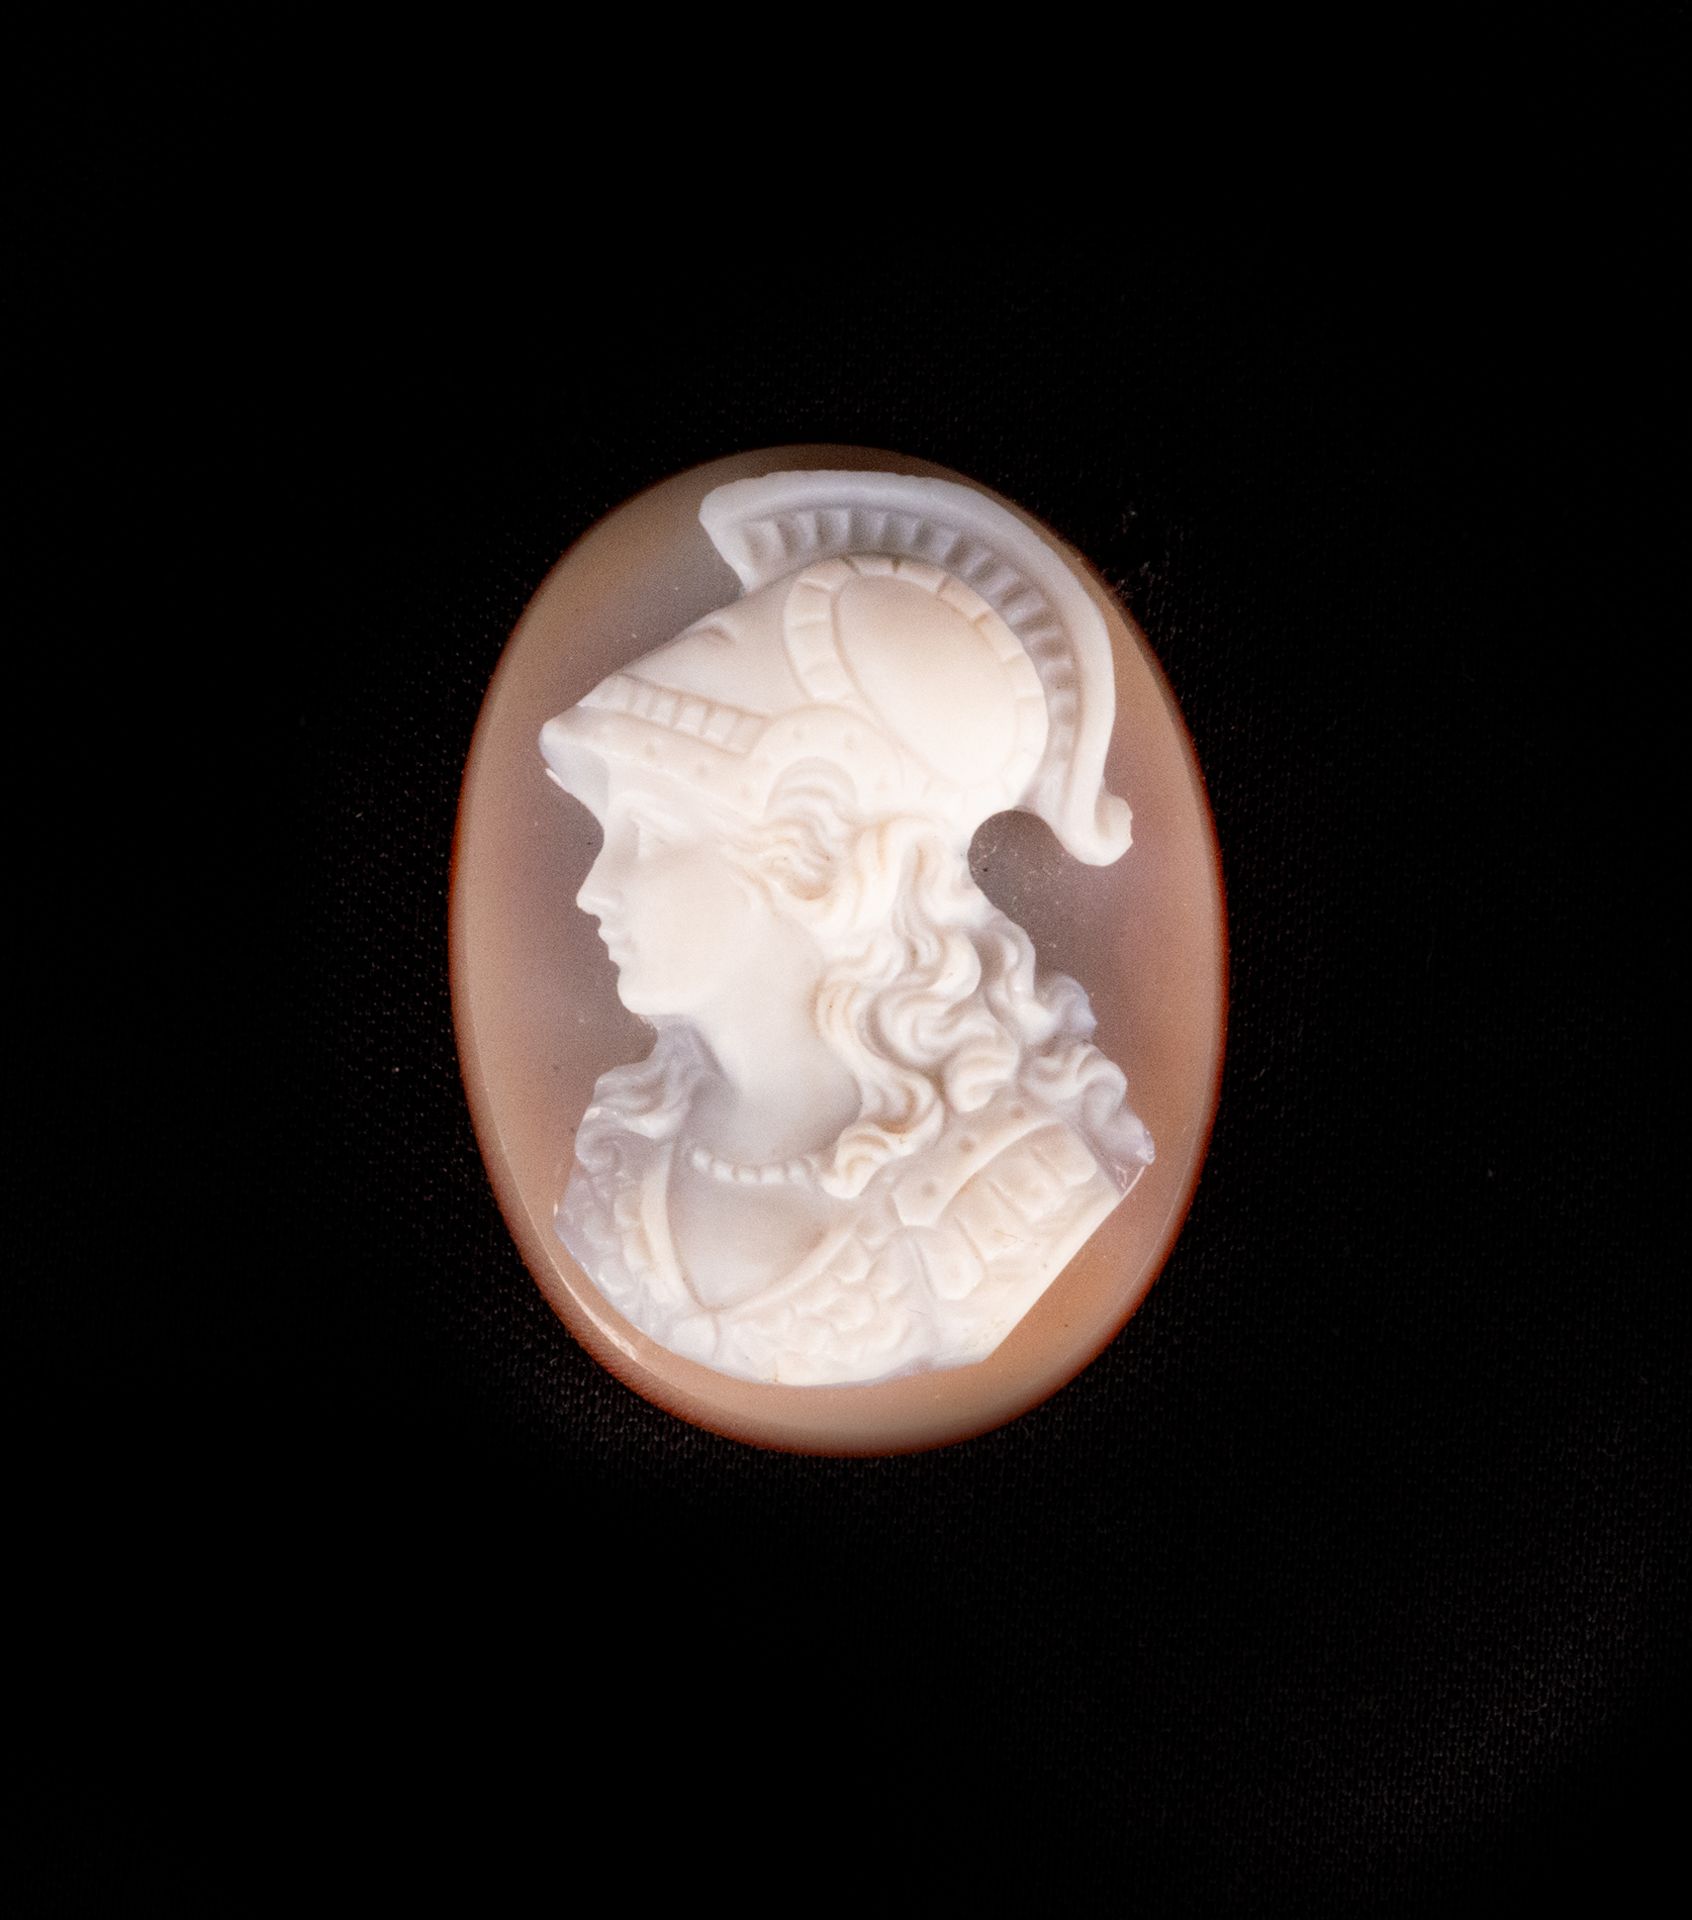 Triple layer cameo representing Goddess Mars, Roman Workshops, 19th century